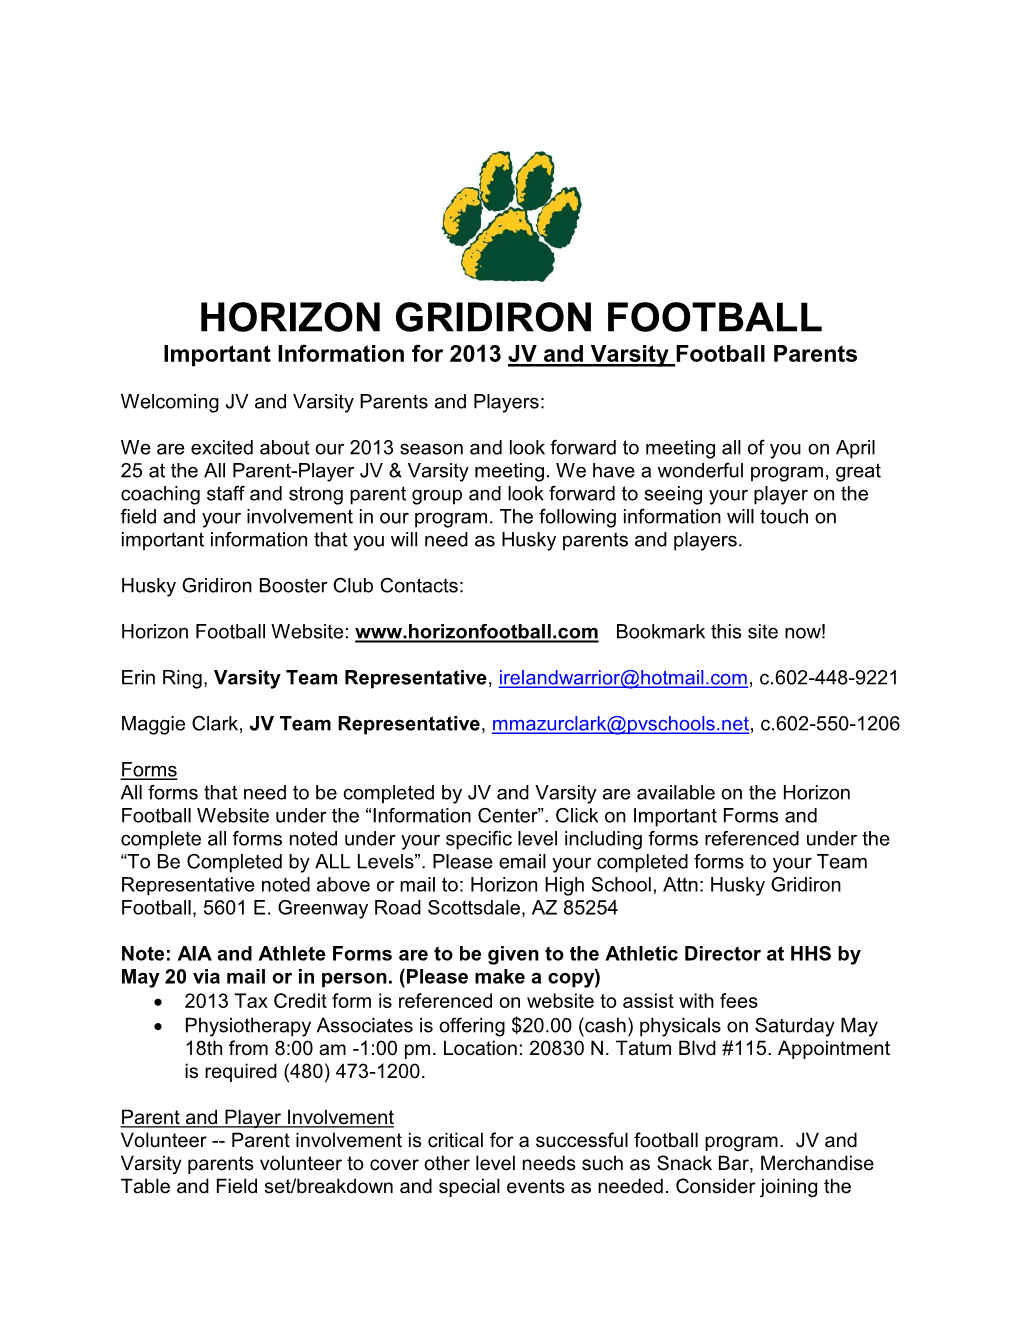 HORIZON GRIDIRON FOOTBALL Important Information for 2013 JV and Varsity Football Parents